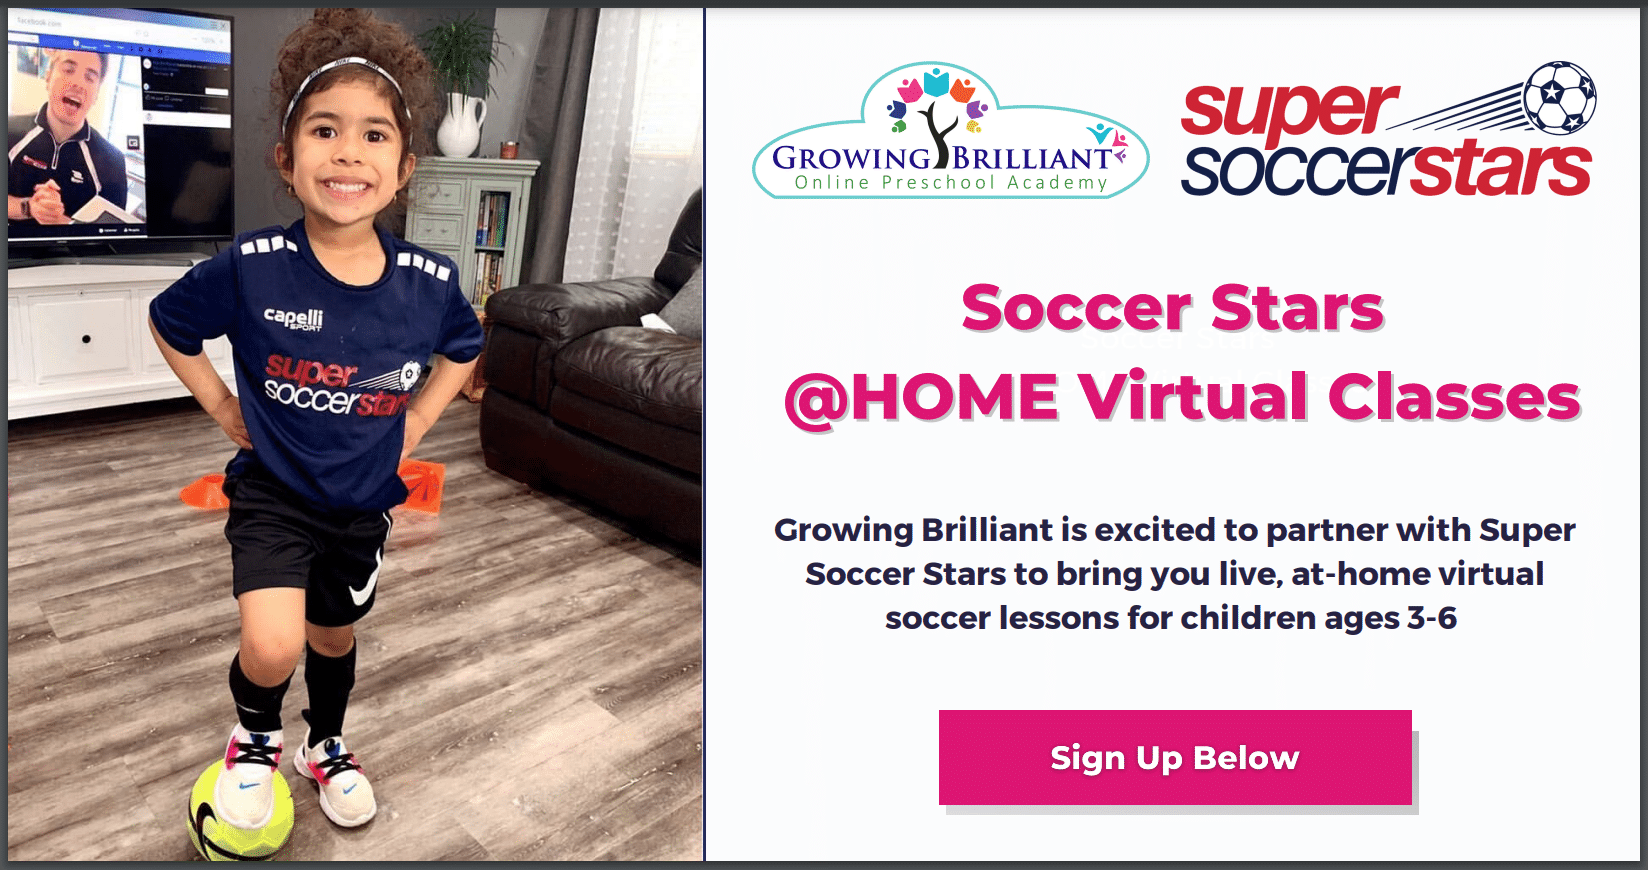 Sign Up For Super Soccer Stars Classes